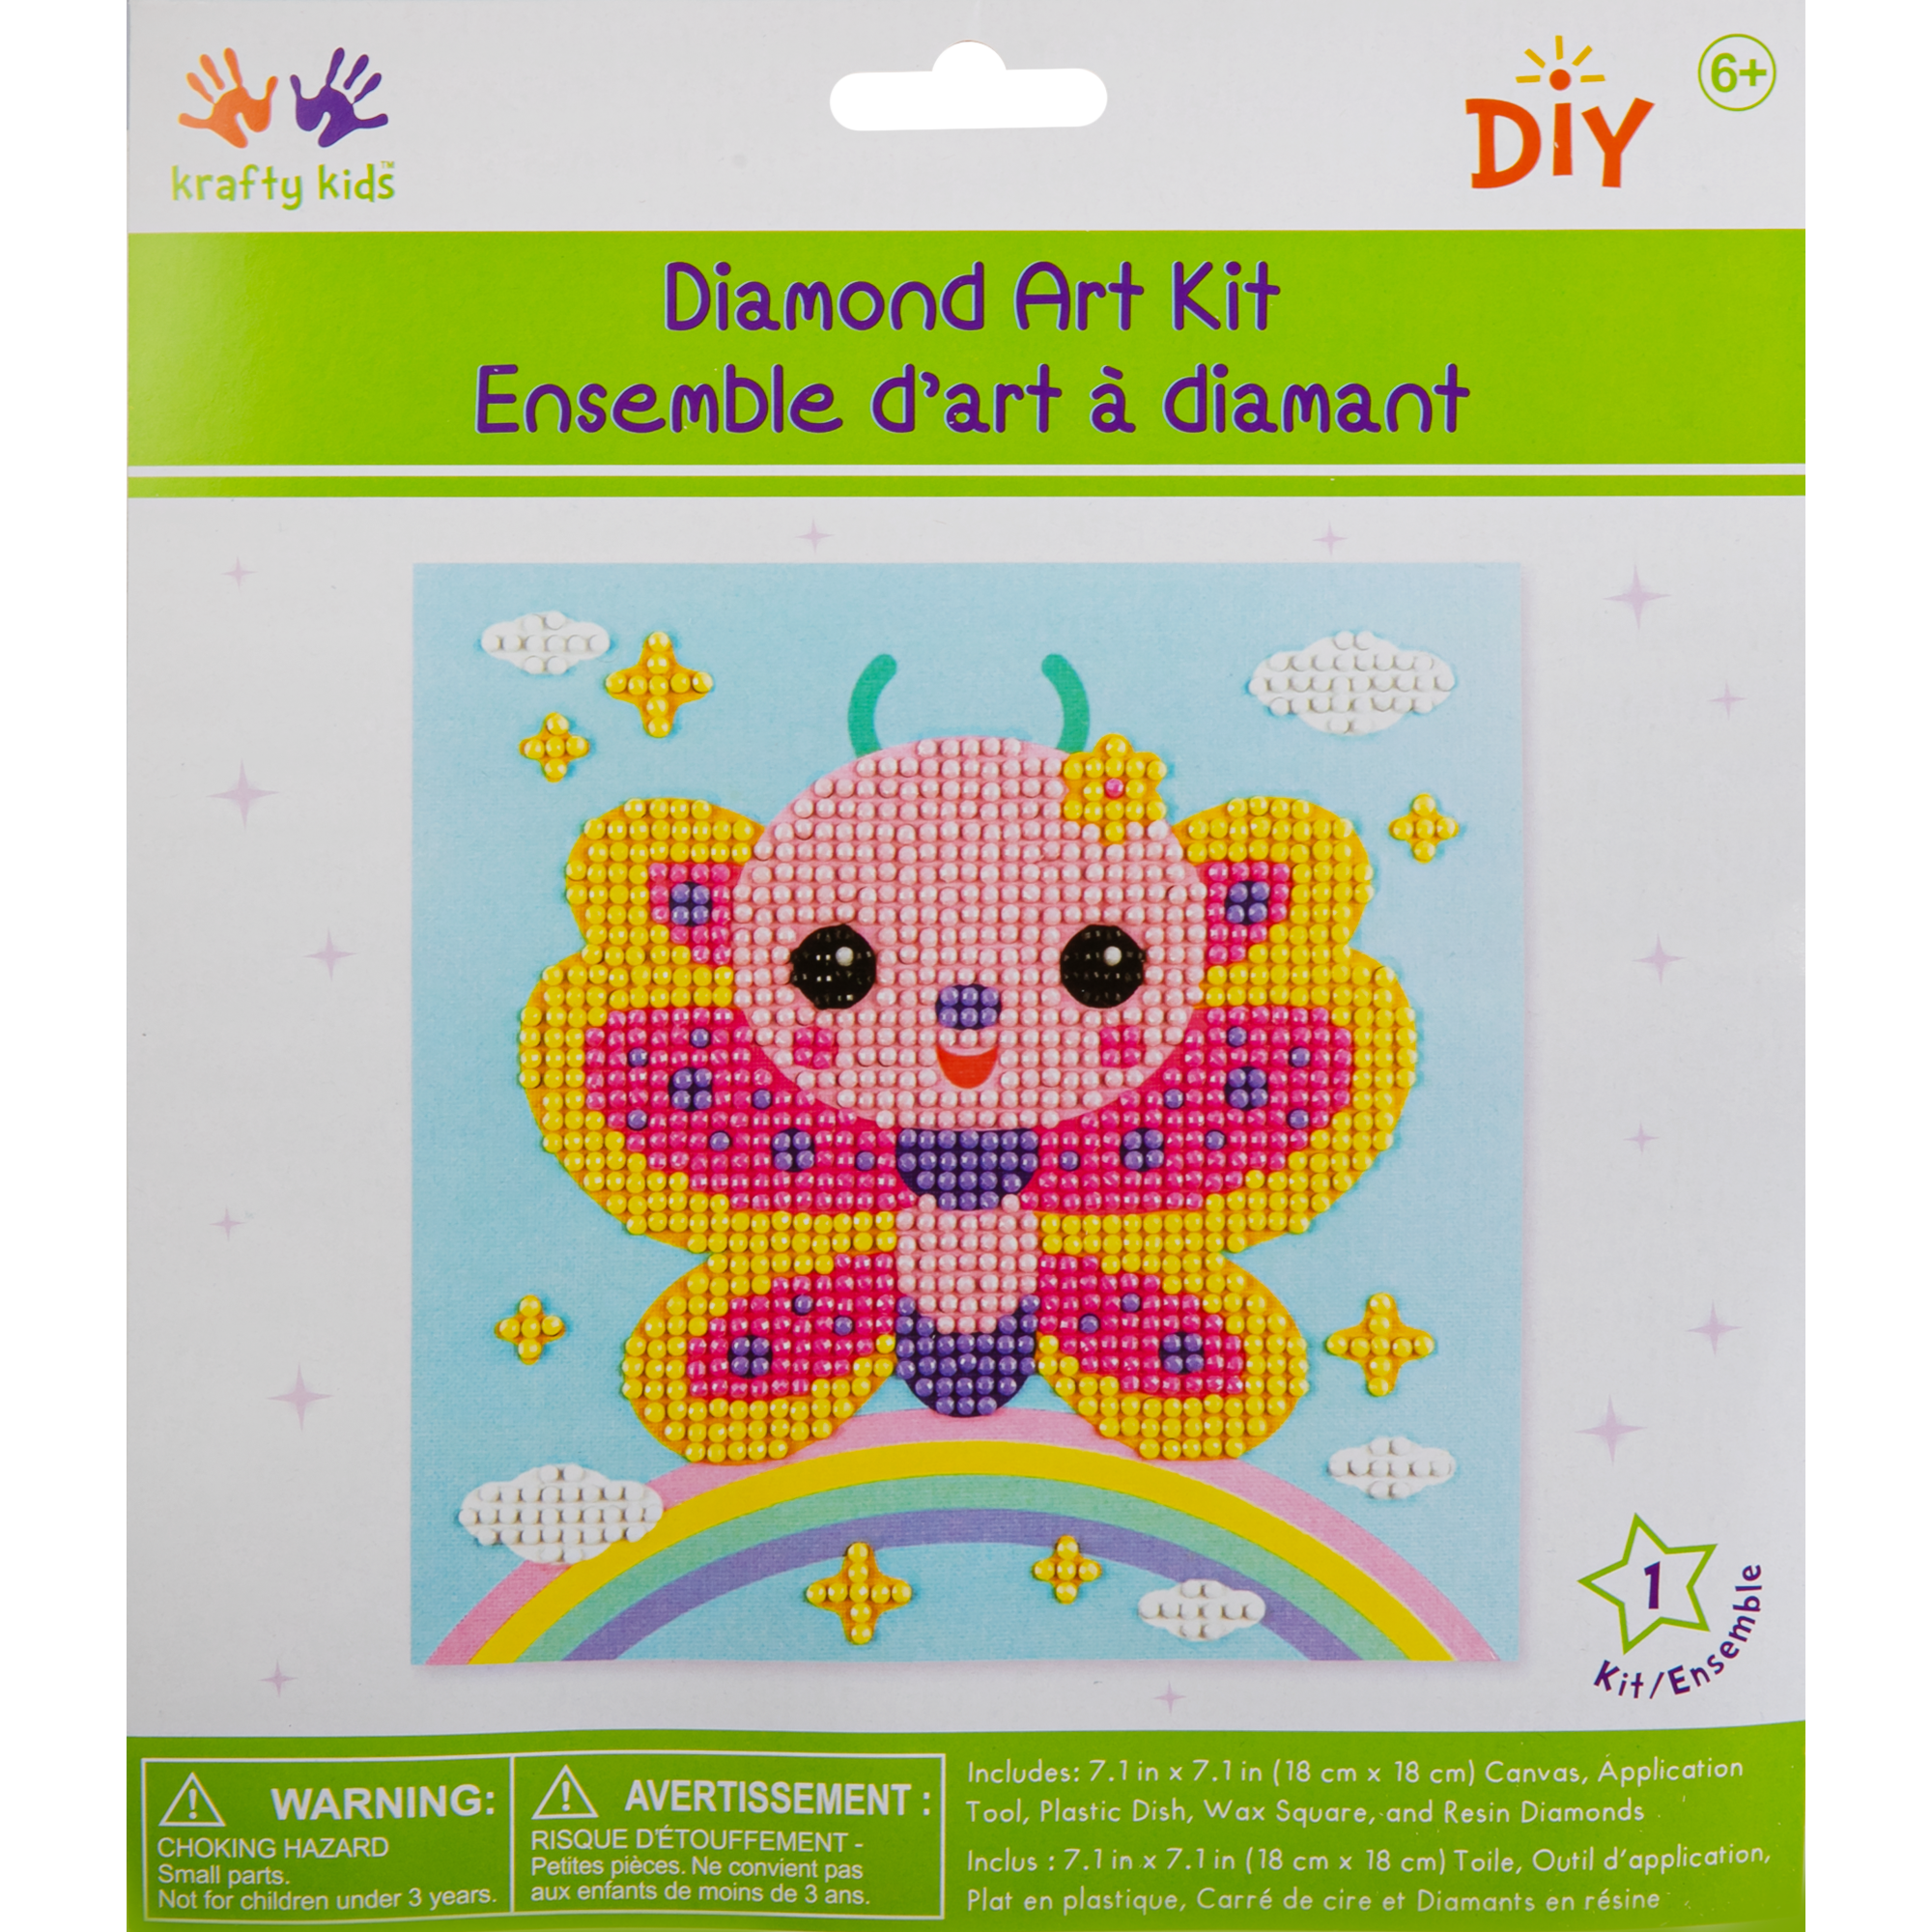 Explore our MultiCraft Krafty Kids Kit: DIY Diamond Art Kit